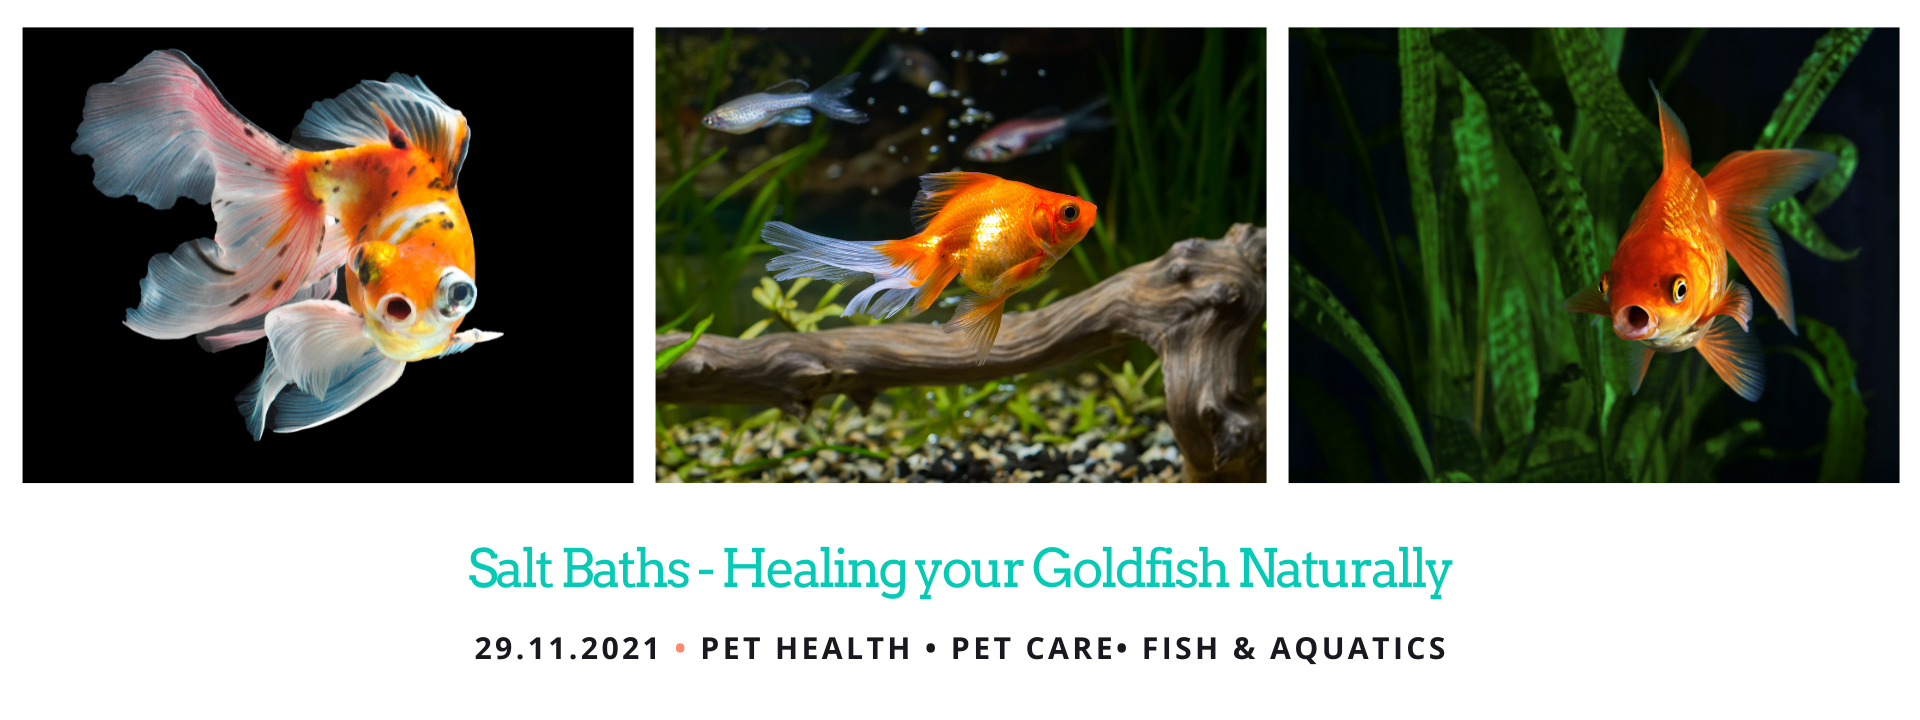 Salt Bath For Fish - Healing Fish with Salt Bath - For Petz NI